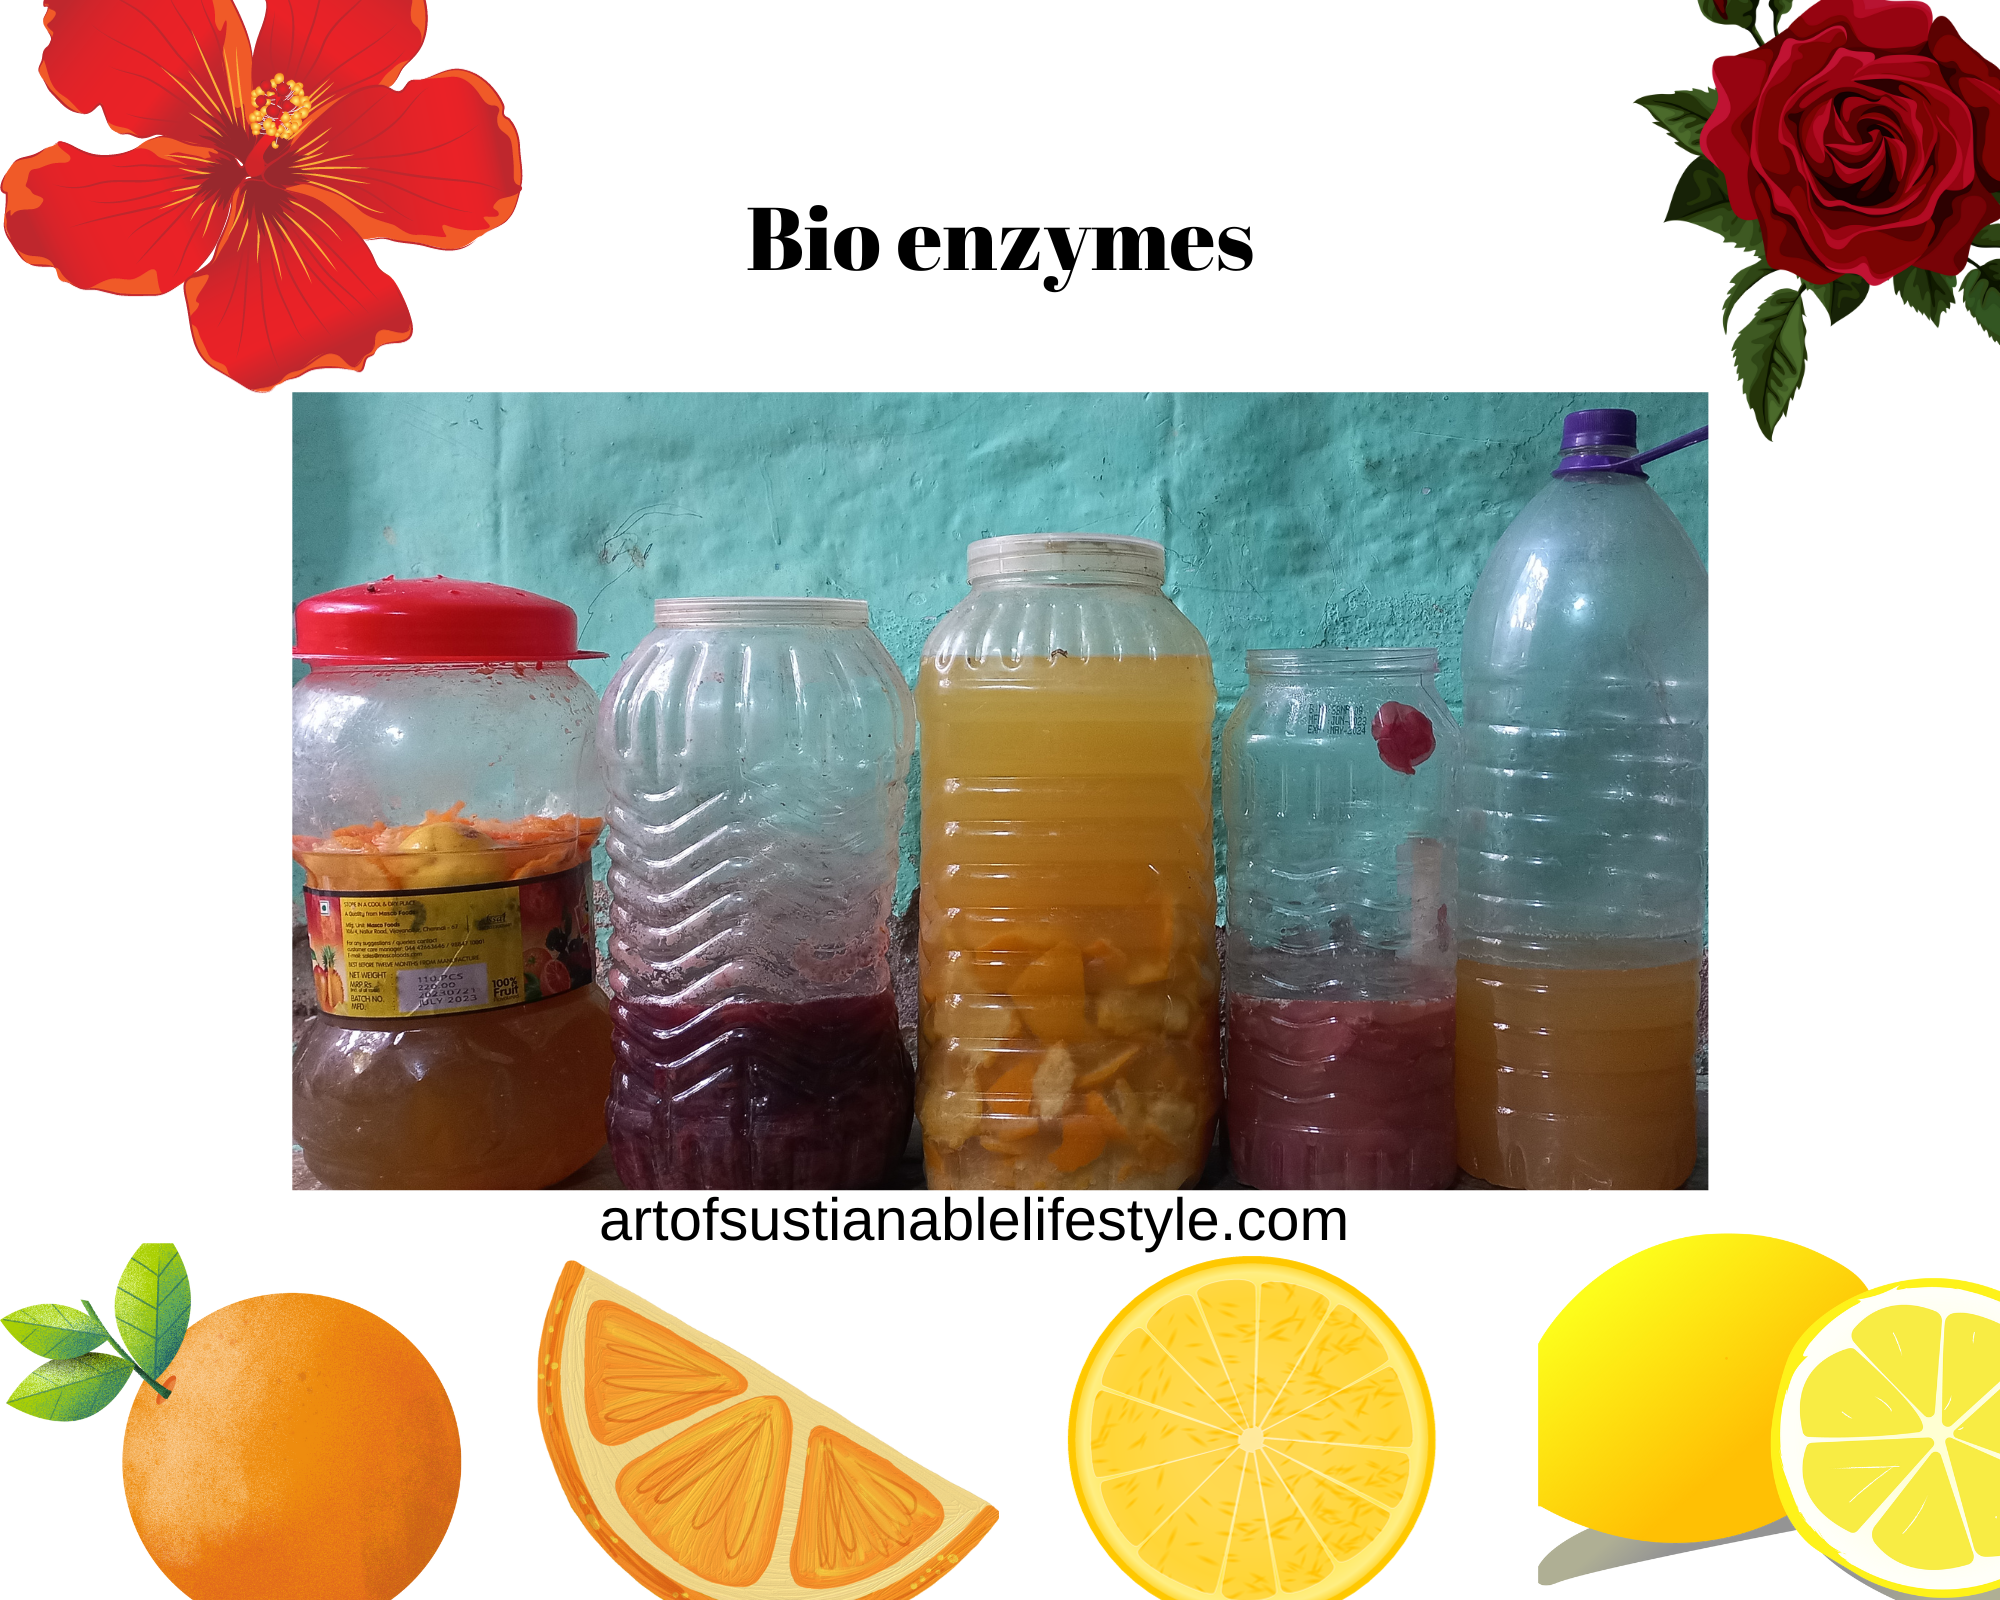 Bio enzyme uses